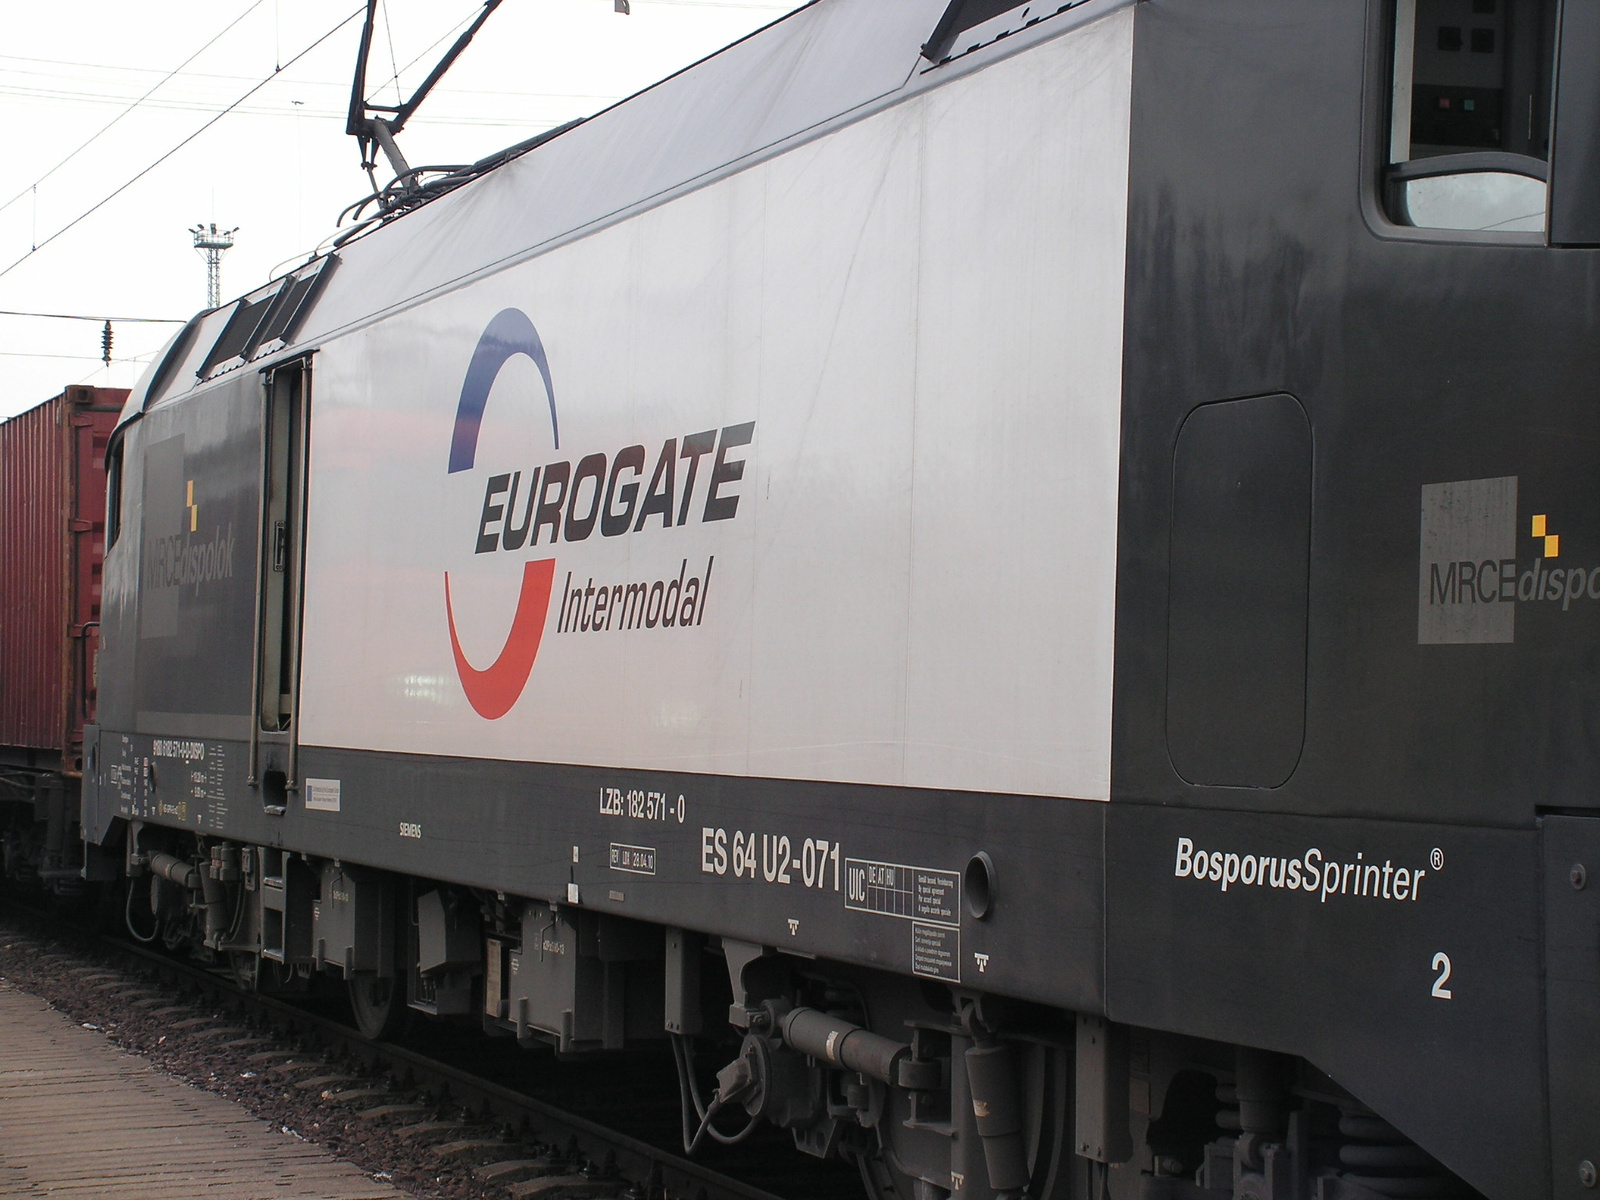 D-DISPO 9180 6182 571-0 (EUROGATE Intermodal), SzG3